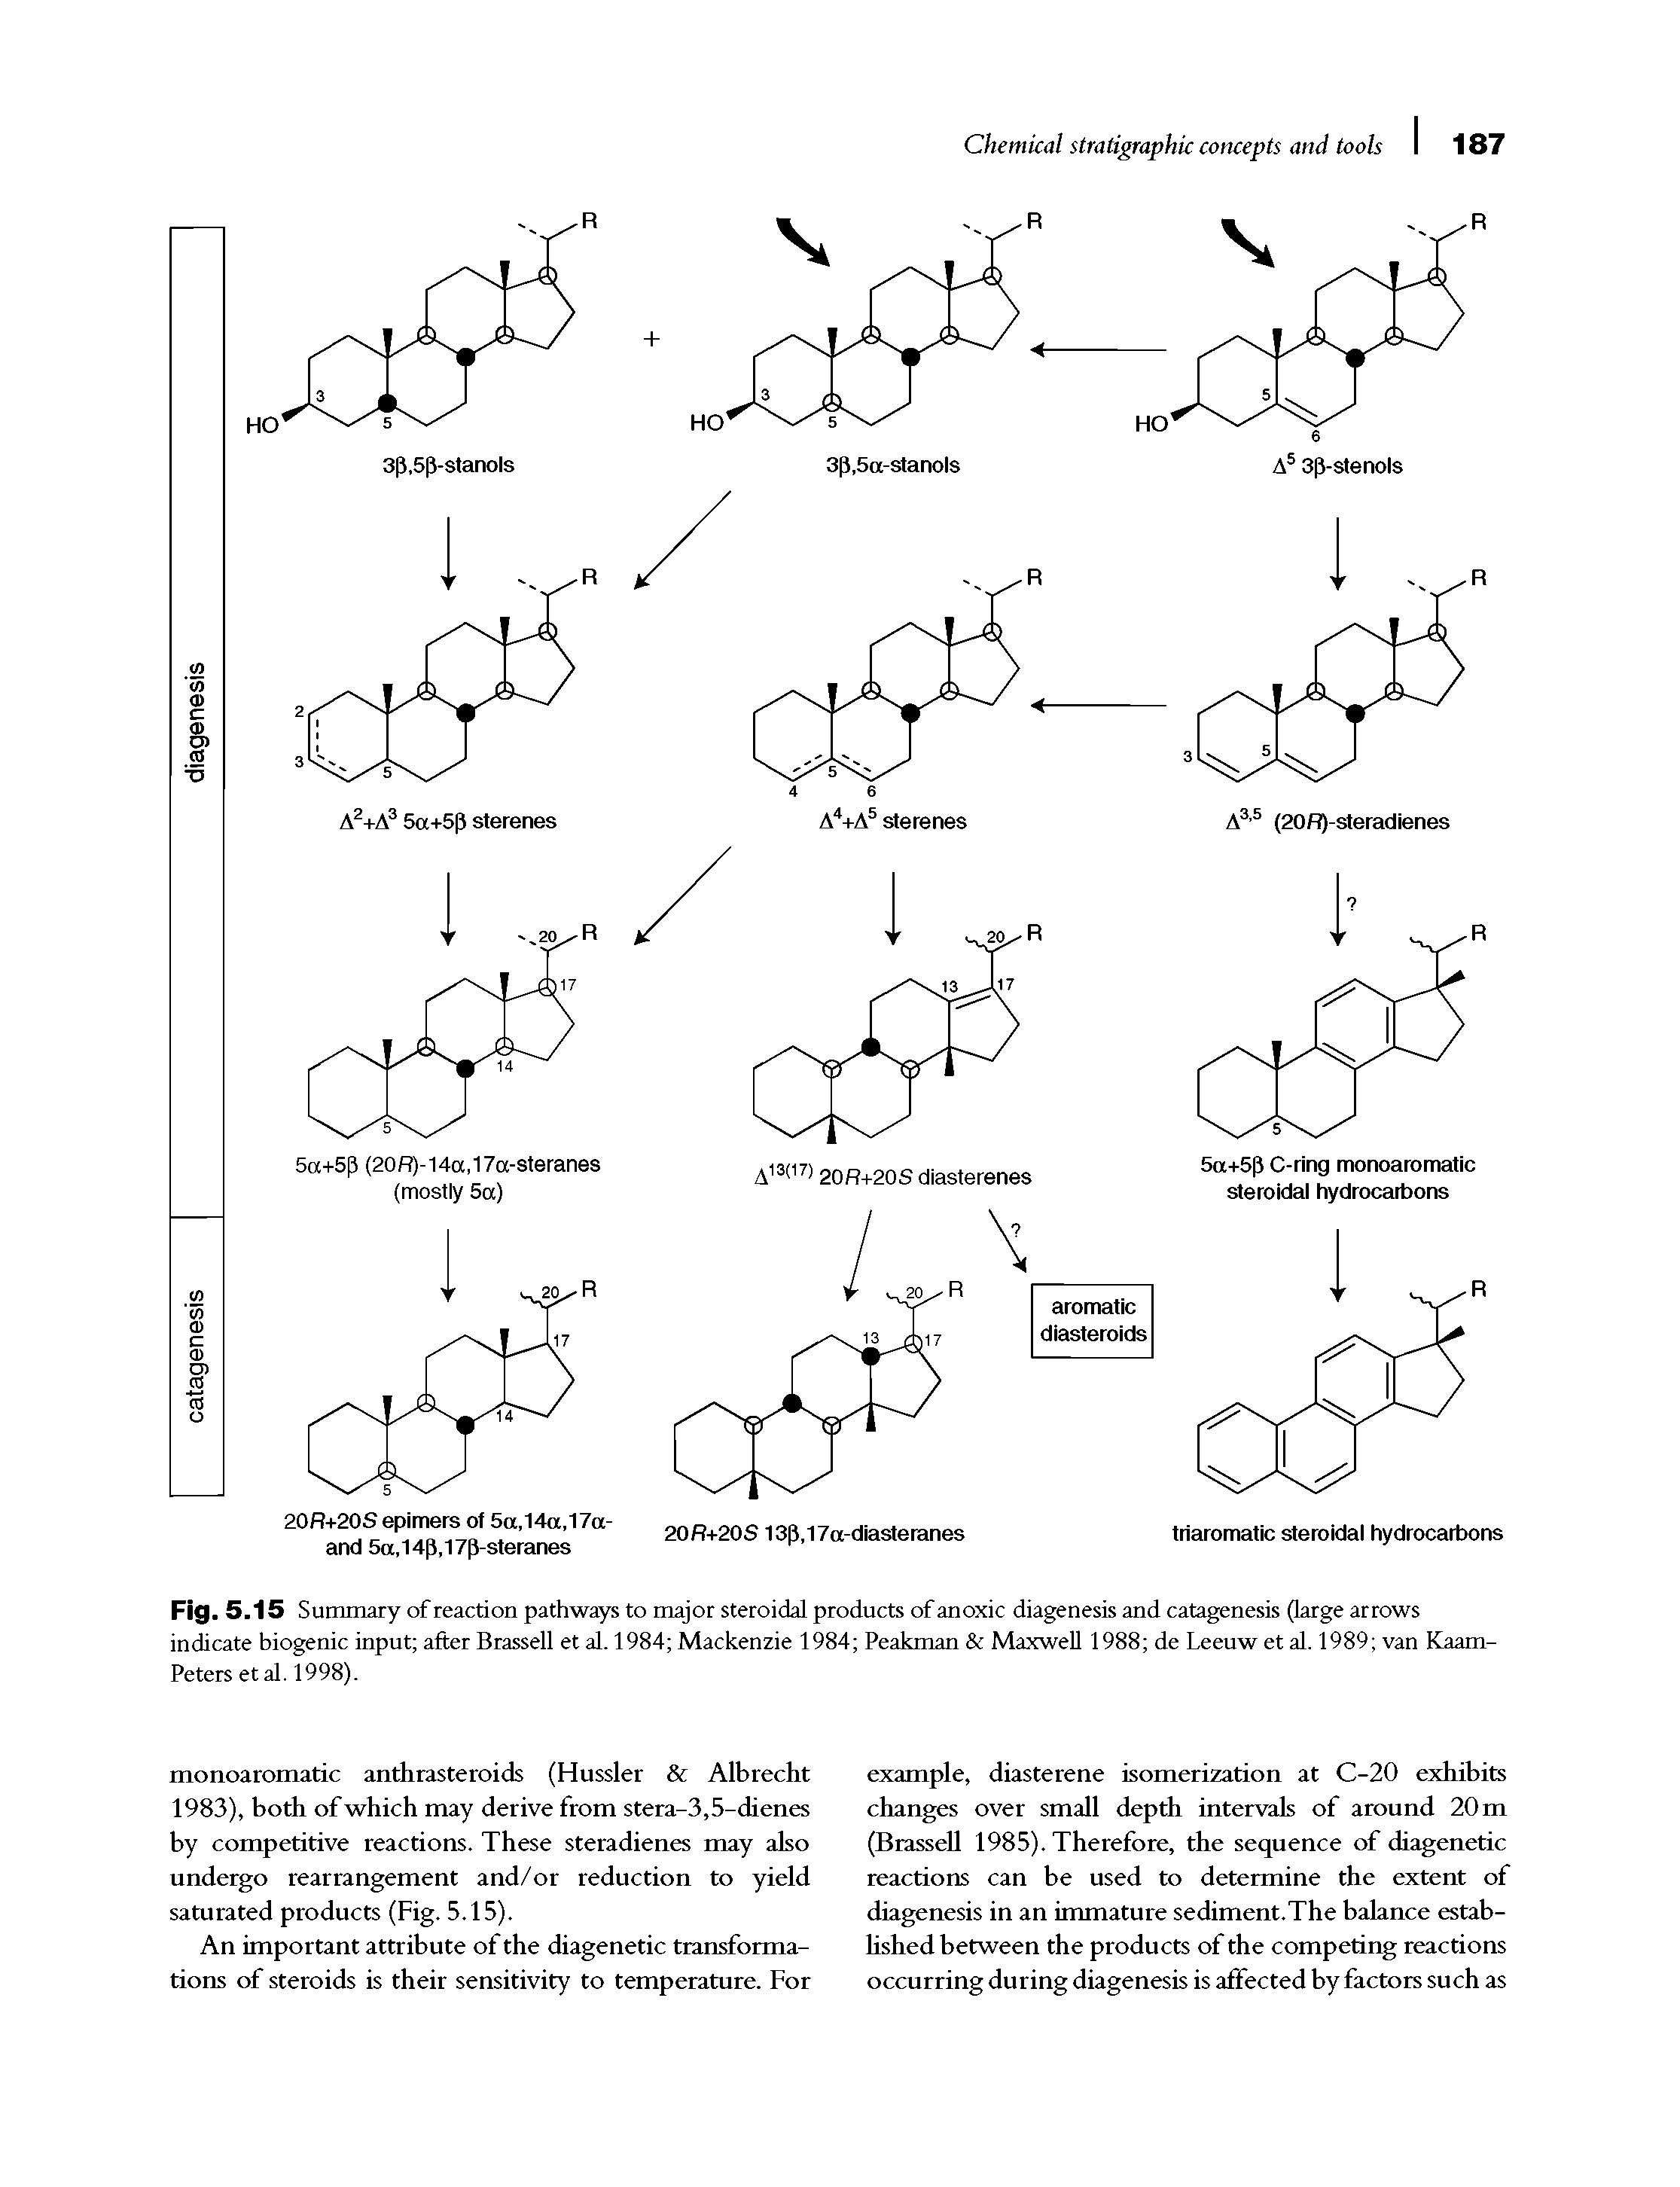 Fig. 5.15 Summary of reaction pathways to major steroidal products of anoxic diagenesis and catagenesis (large arrows indicate biogenic input after Brassell et al. 1984 Mackenzie 1984 Peakman Maxwell 1988 de Leeuw et al. 1989 van Kaam-Peters et al. 1998).